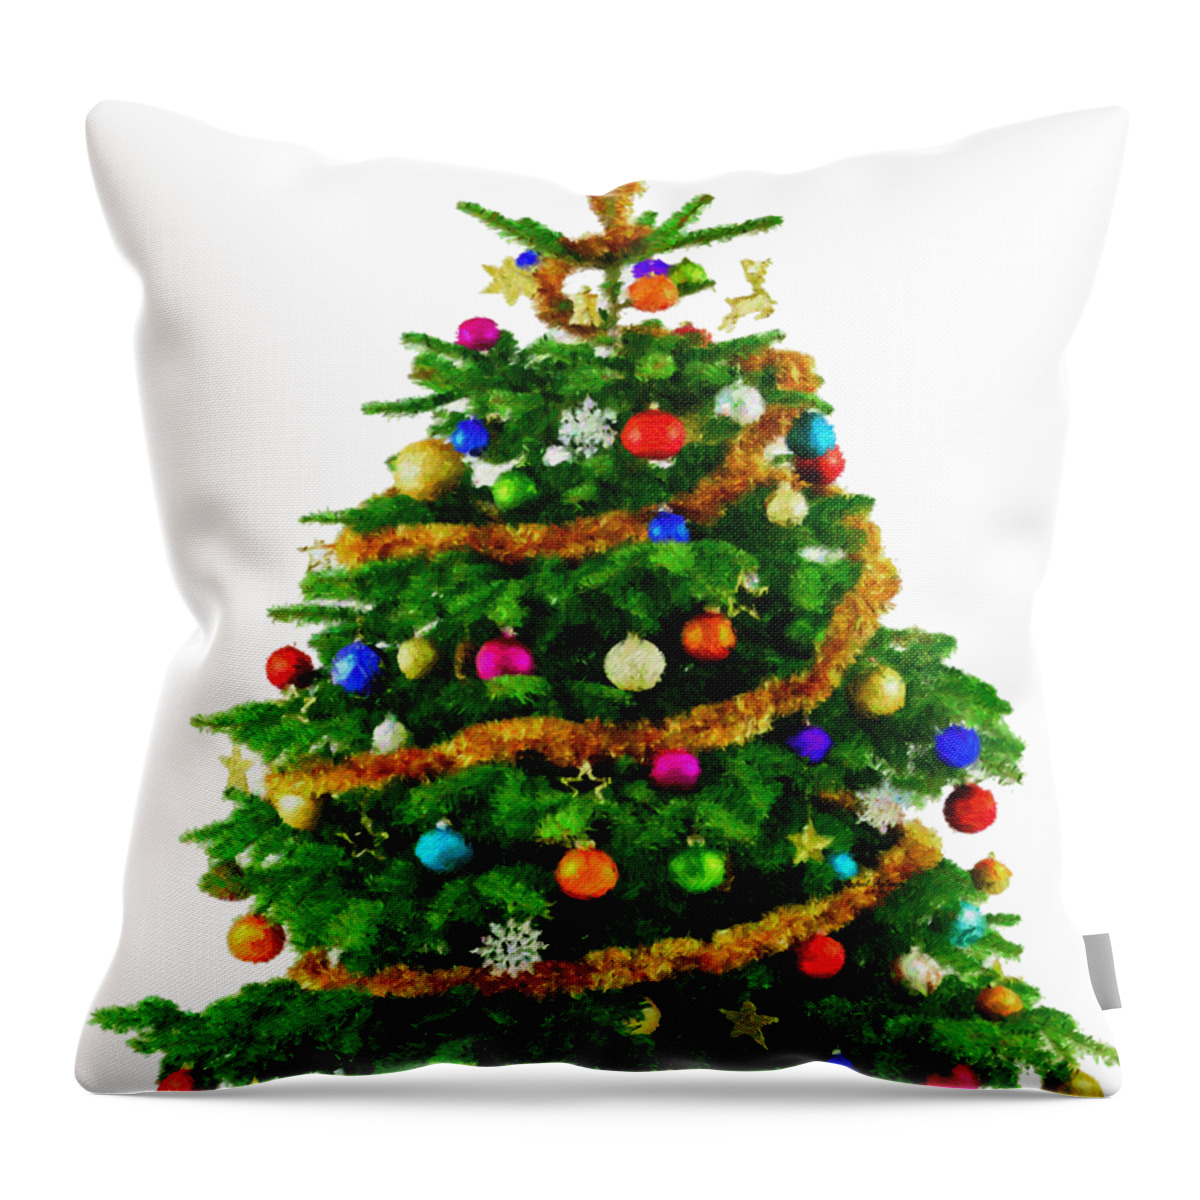  Throw Pillow featuring the digital art Christmas Tree 1417 by Rafael Salazar